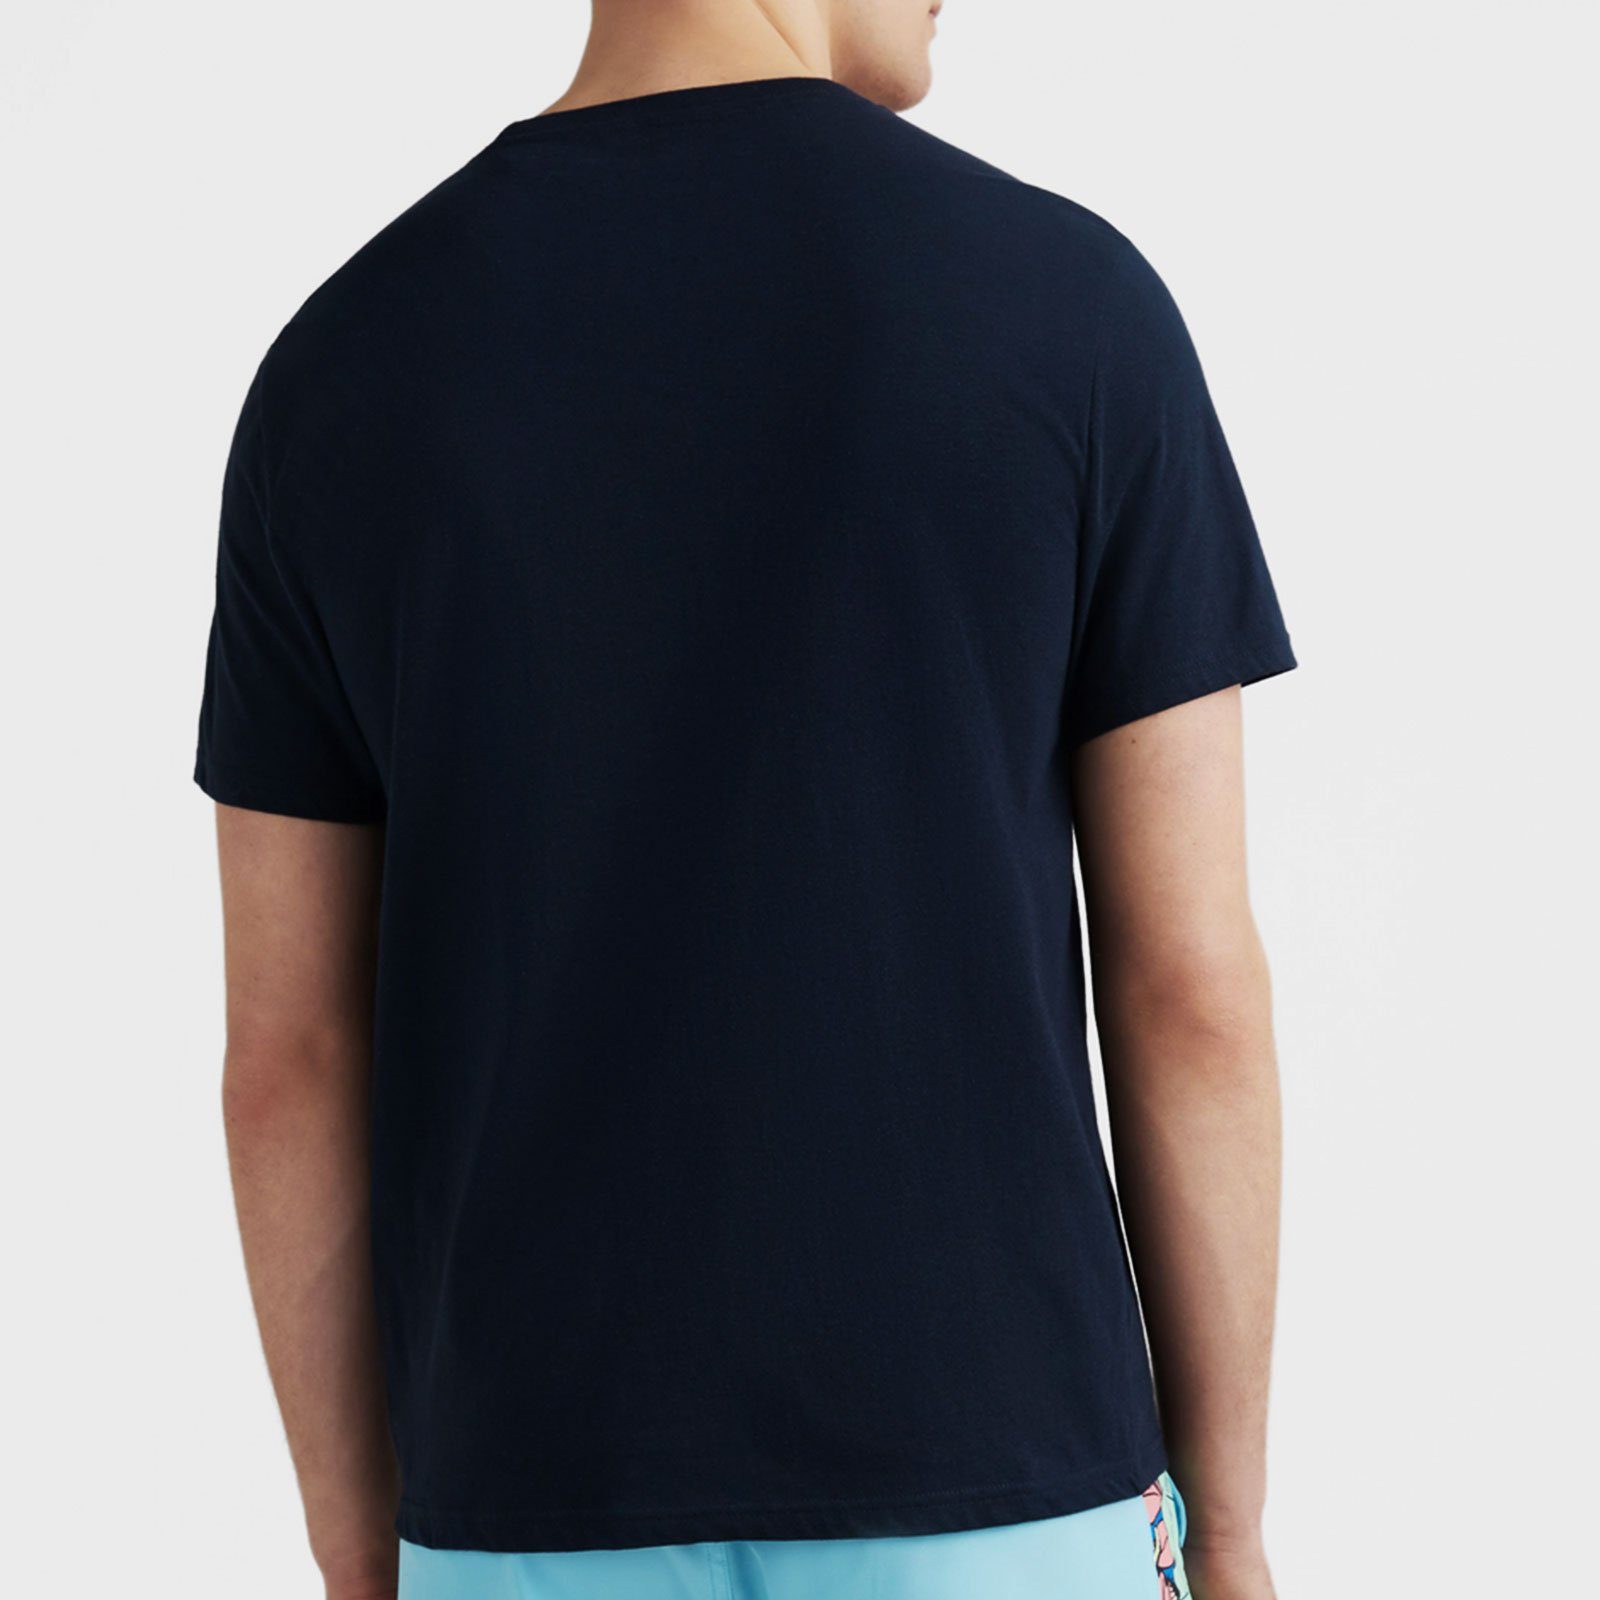 O'Neill T-Shirt Seareef mit kreisförmigem outer und 15039 Logo Meeresflora-Print space